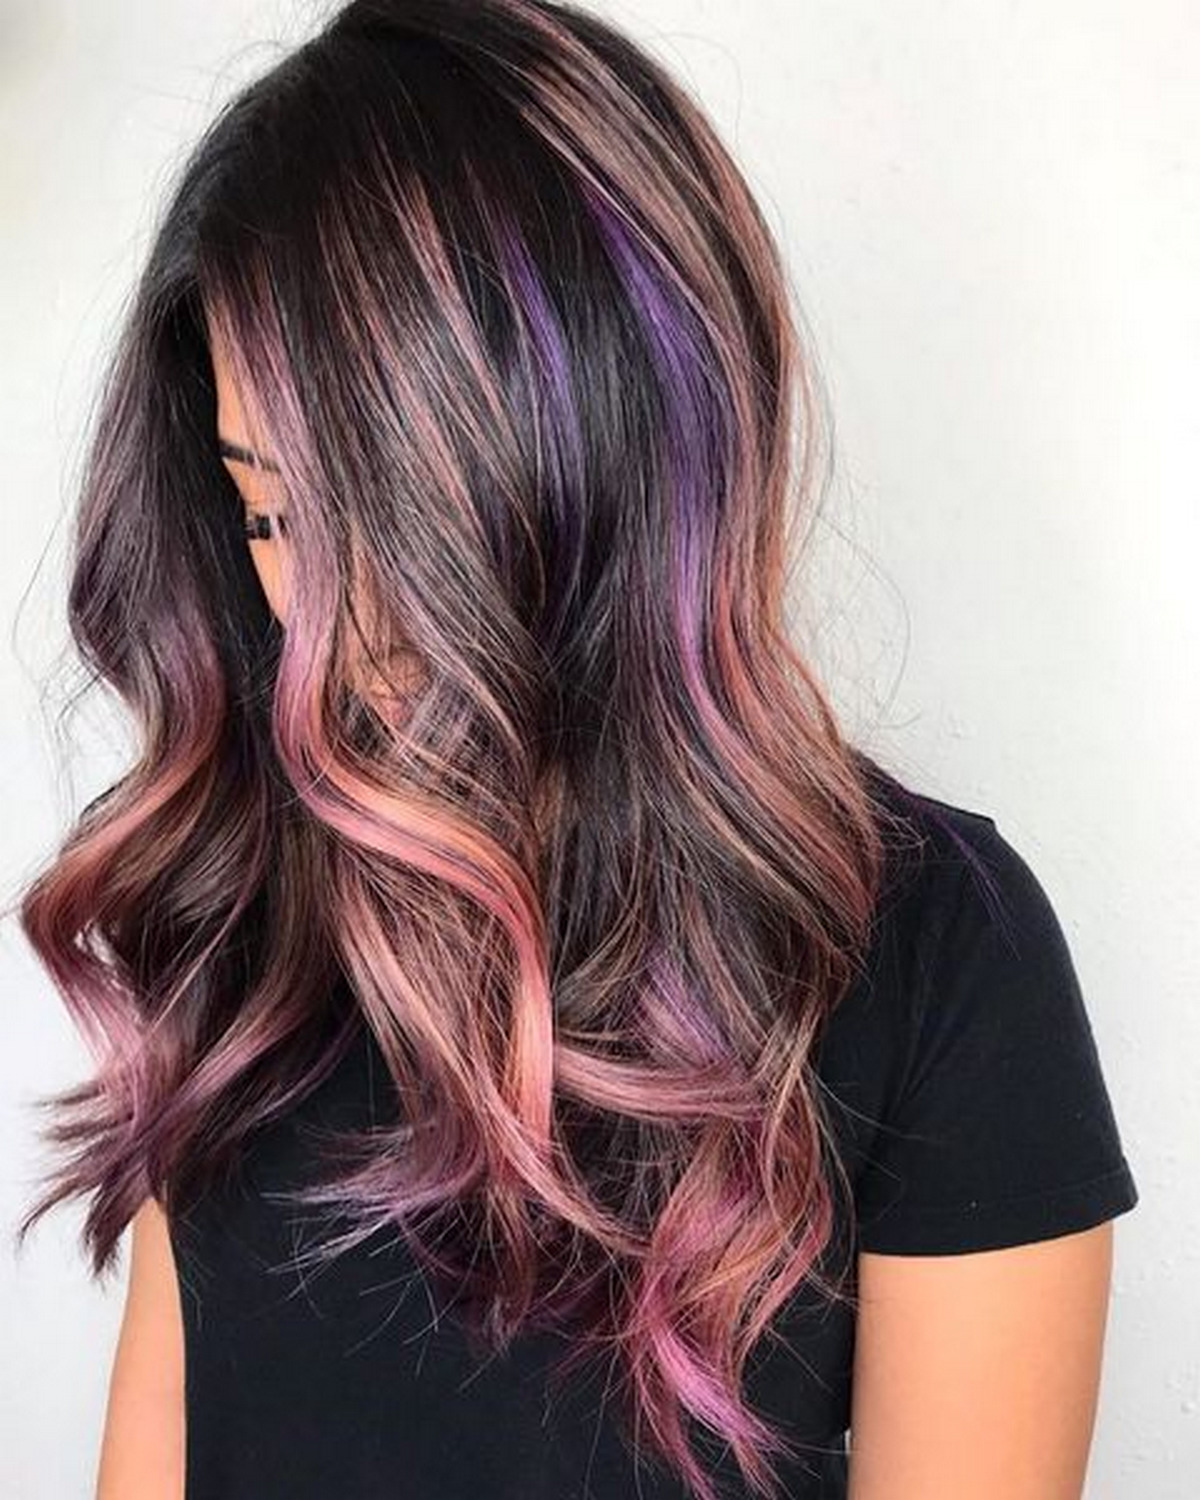 Black Hair And Fuschia Pink Highlights